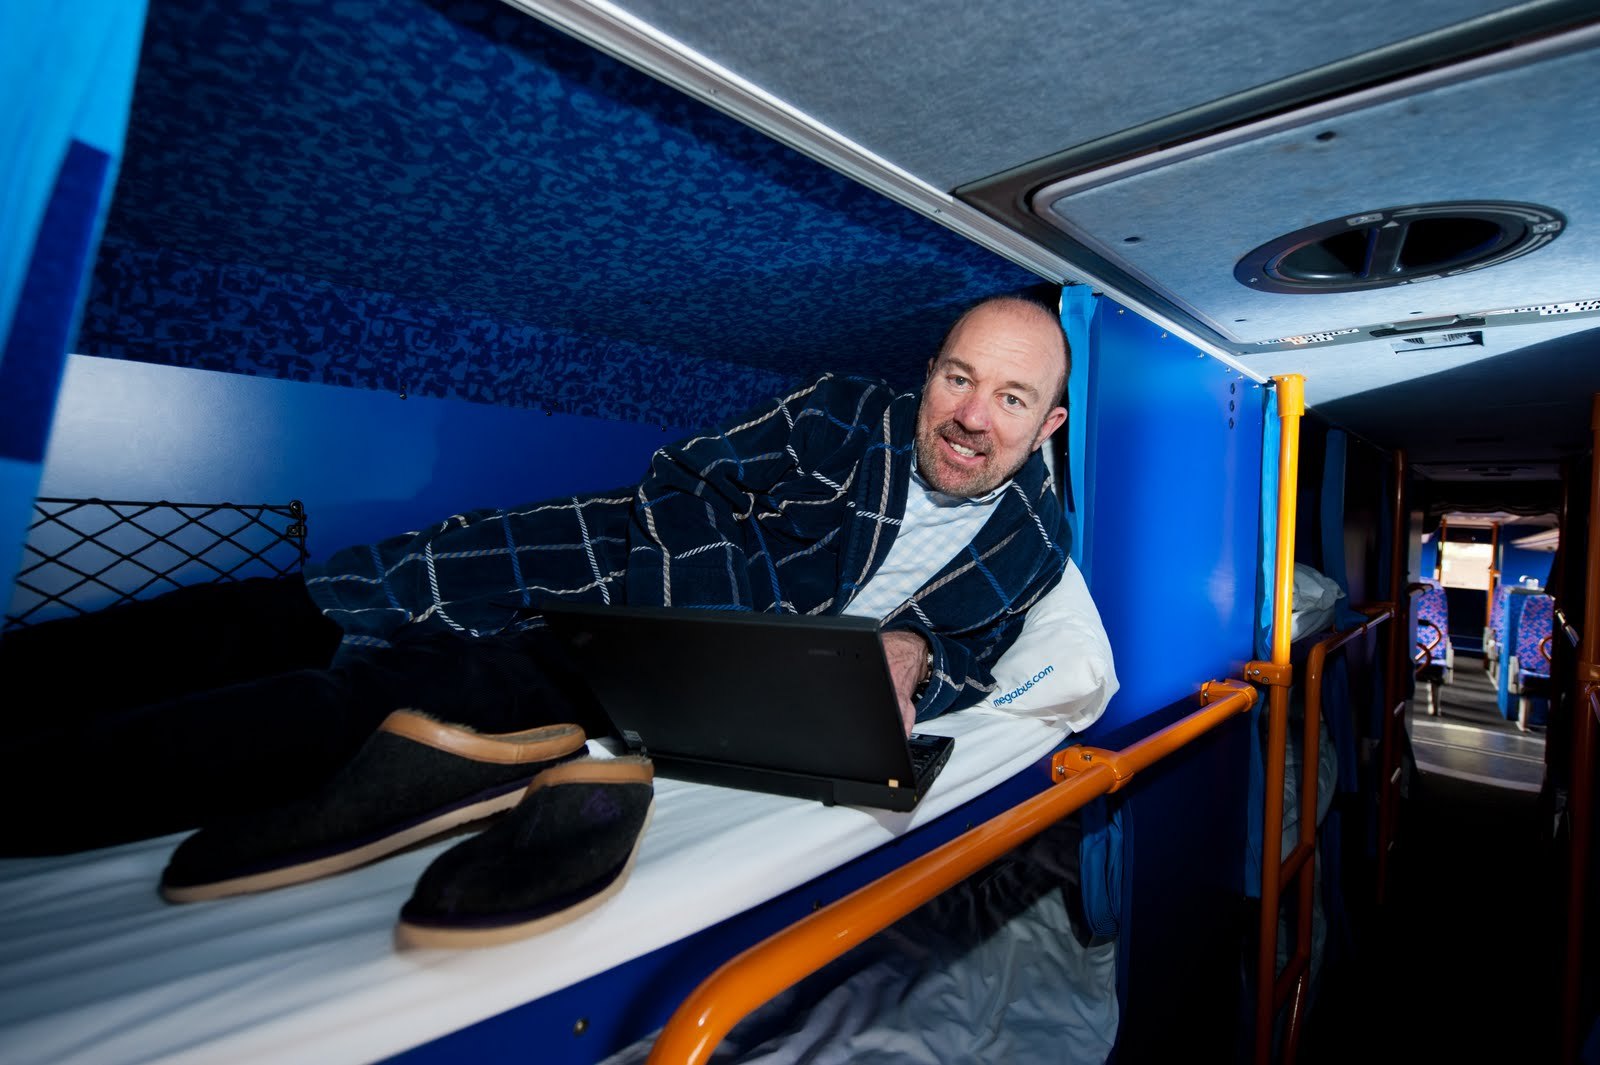 Включи станцию для сна. Спальное место в автобусе для водителя. Спальник в автобусе. Спальник в автобусе для водителя. Автобус с местом для сна.